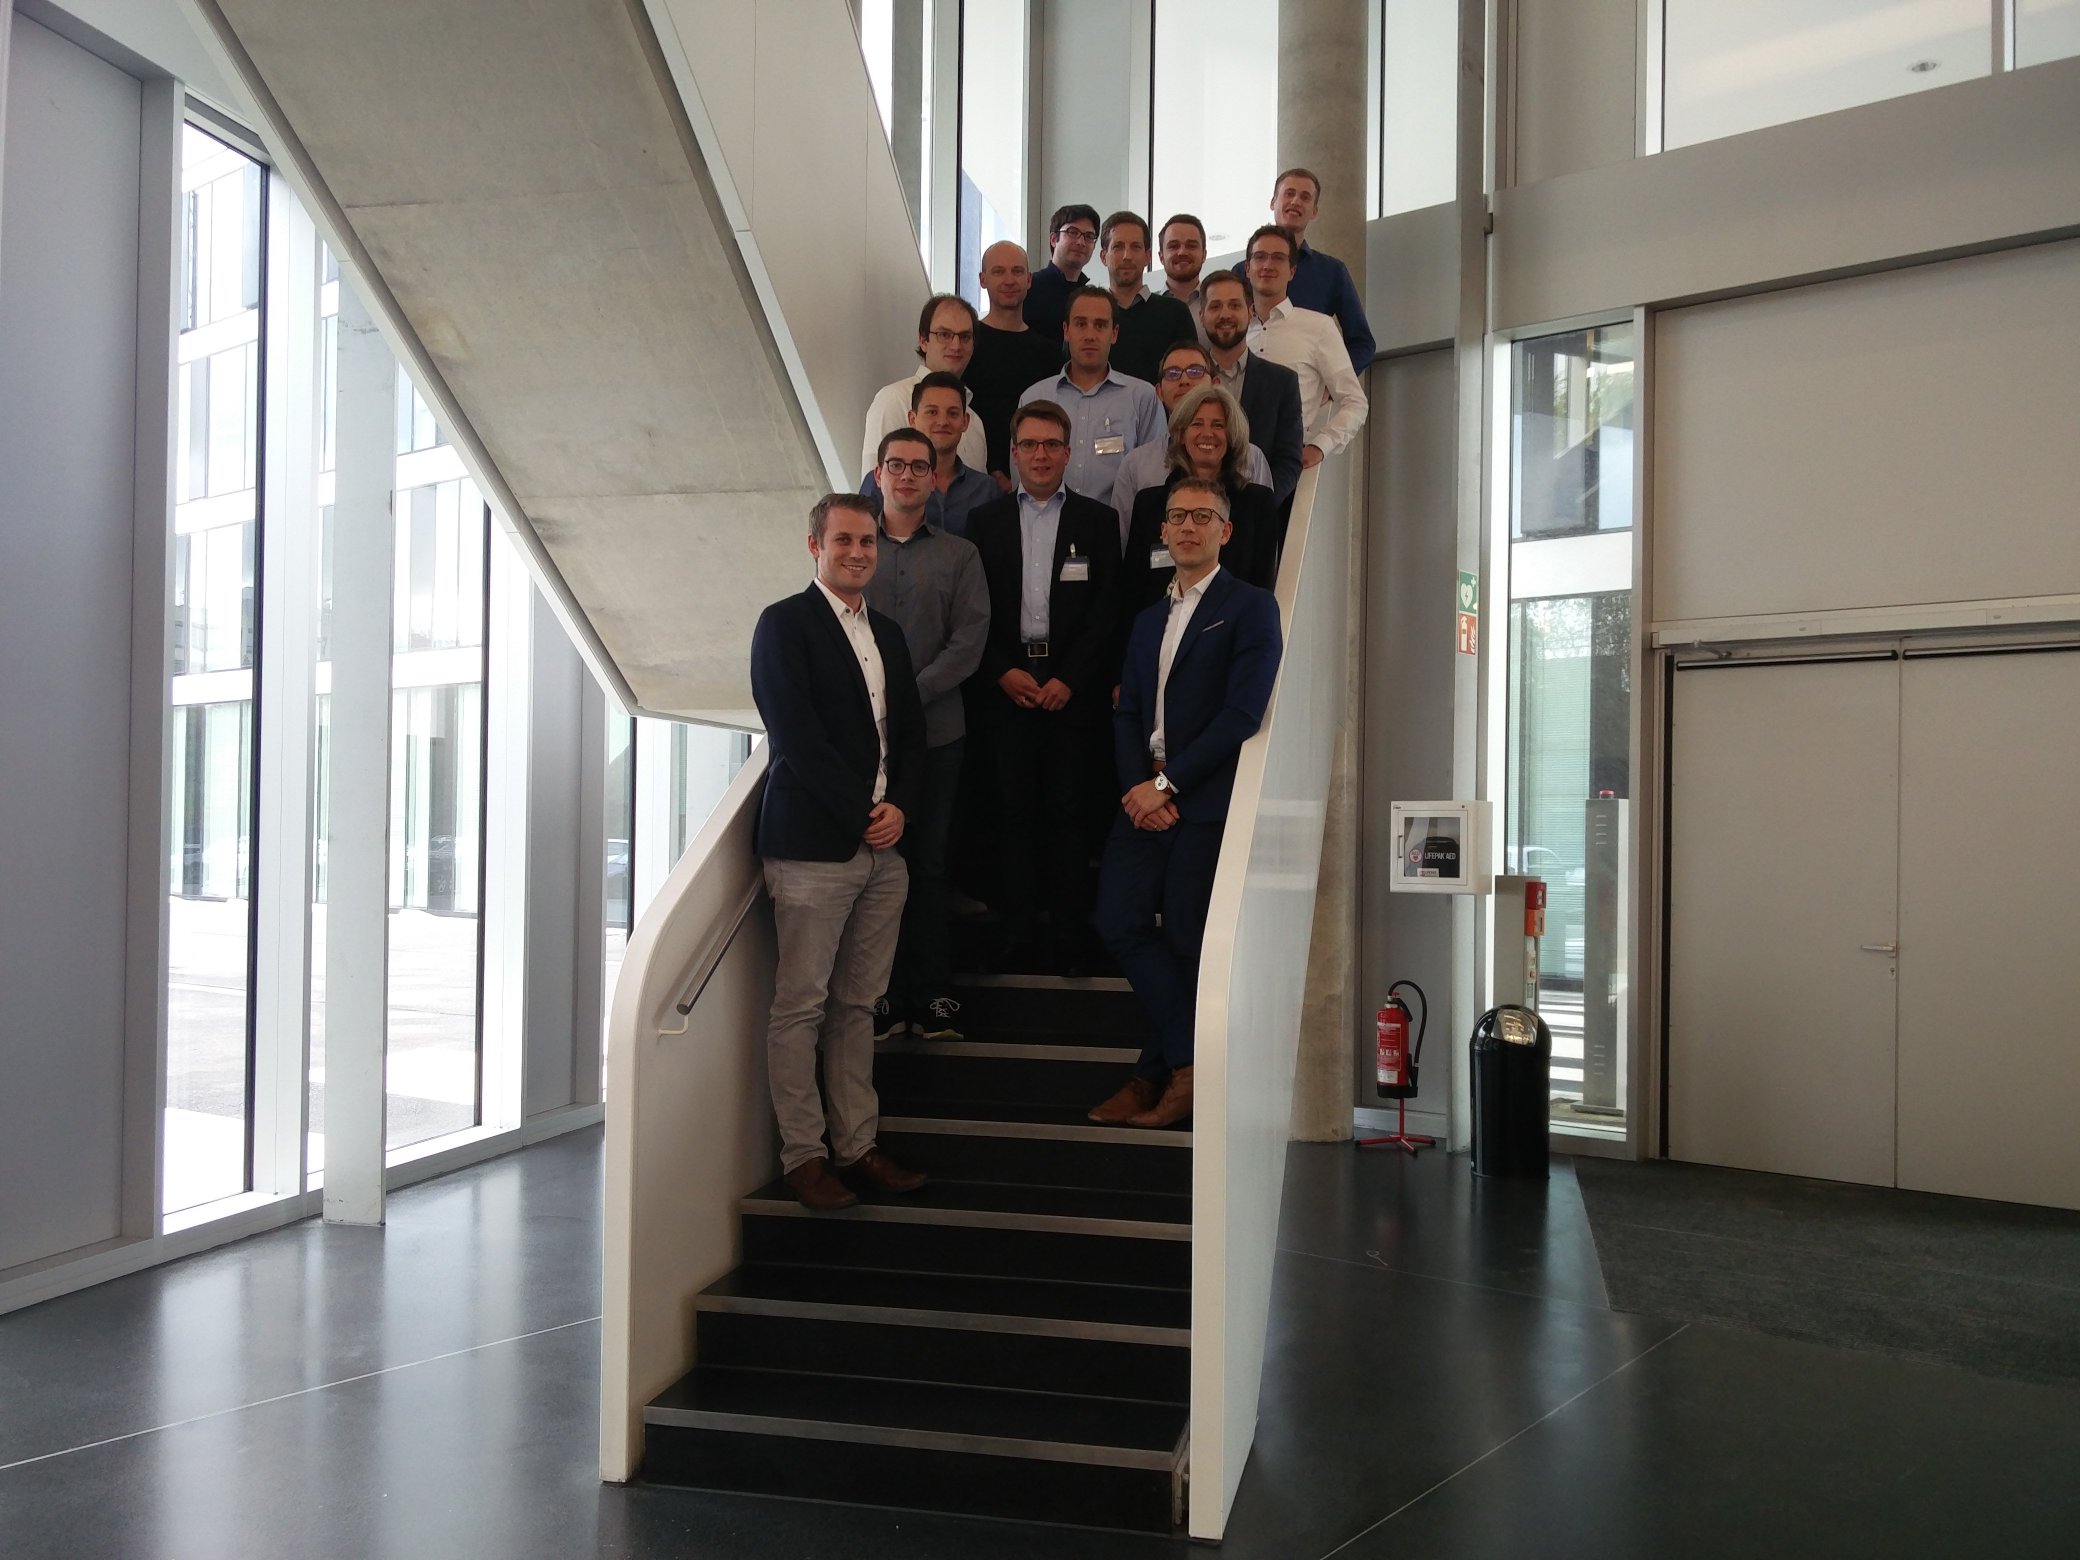 Project partners at RWTH Aachen University